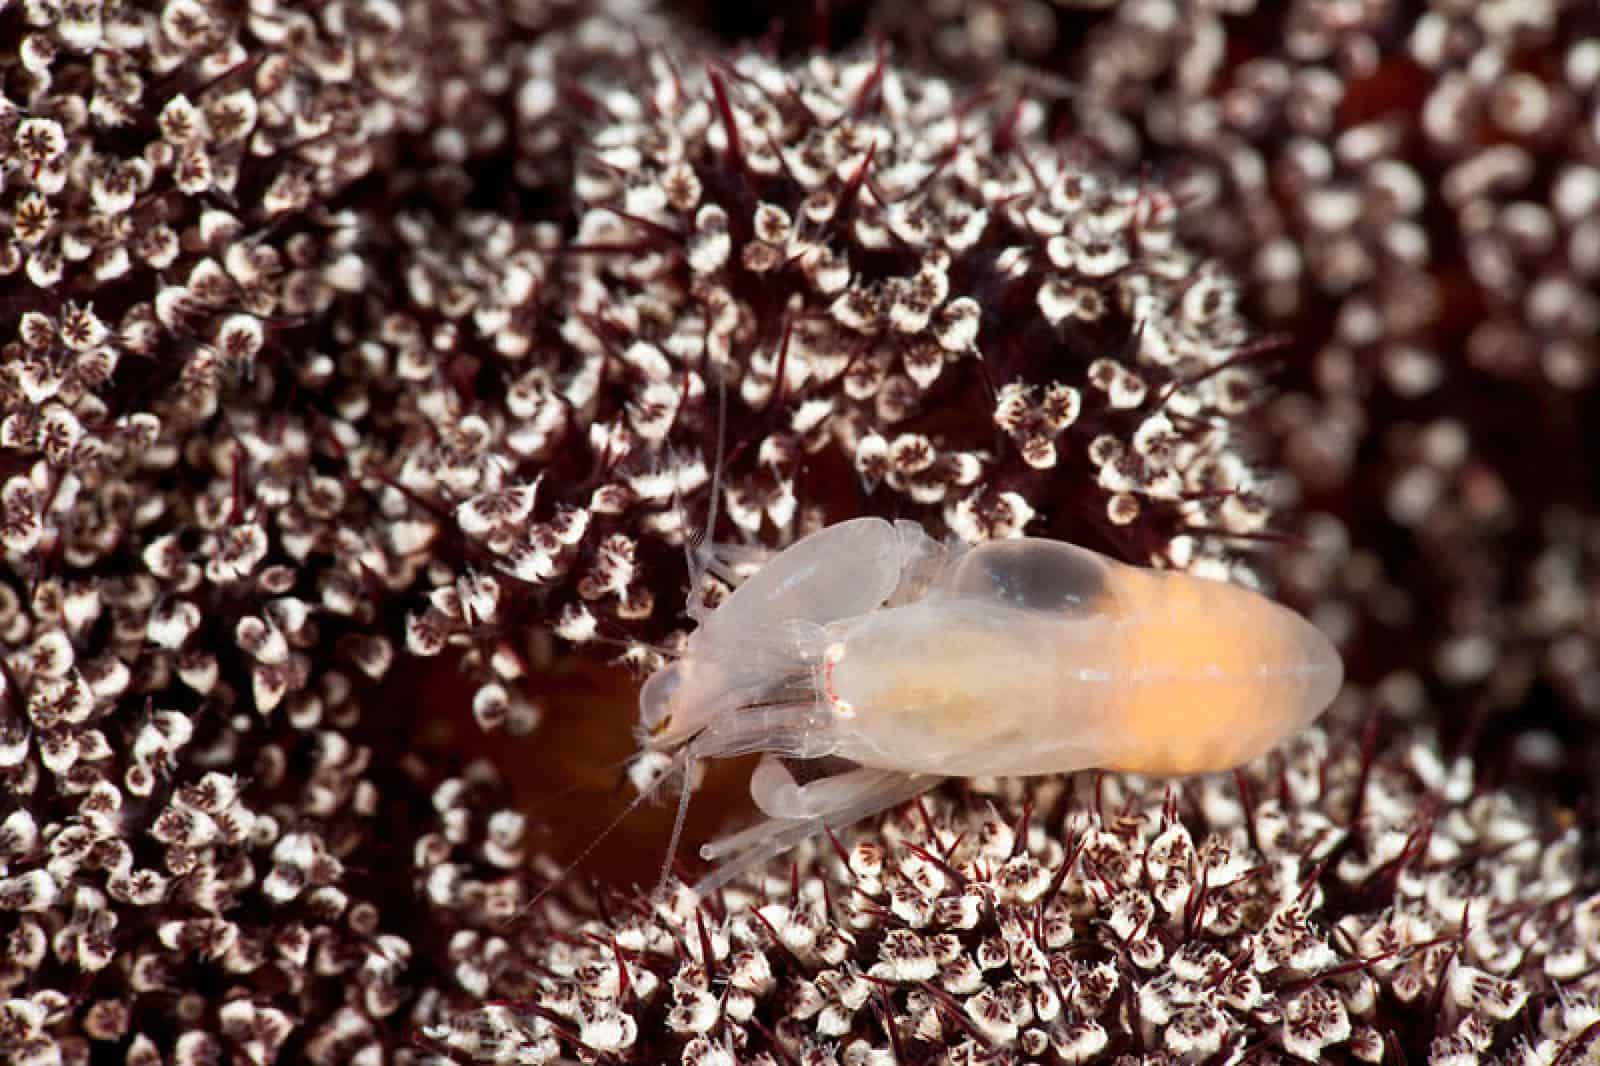 Snapping shrimp, © by Jürgen Freund/WWF-Canon